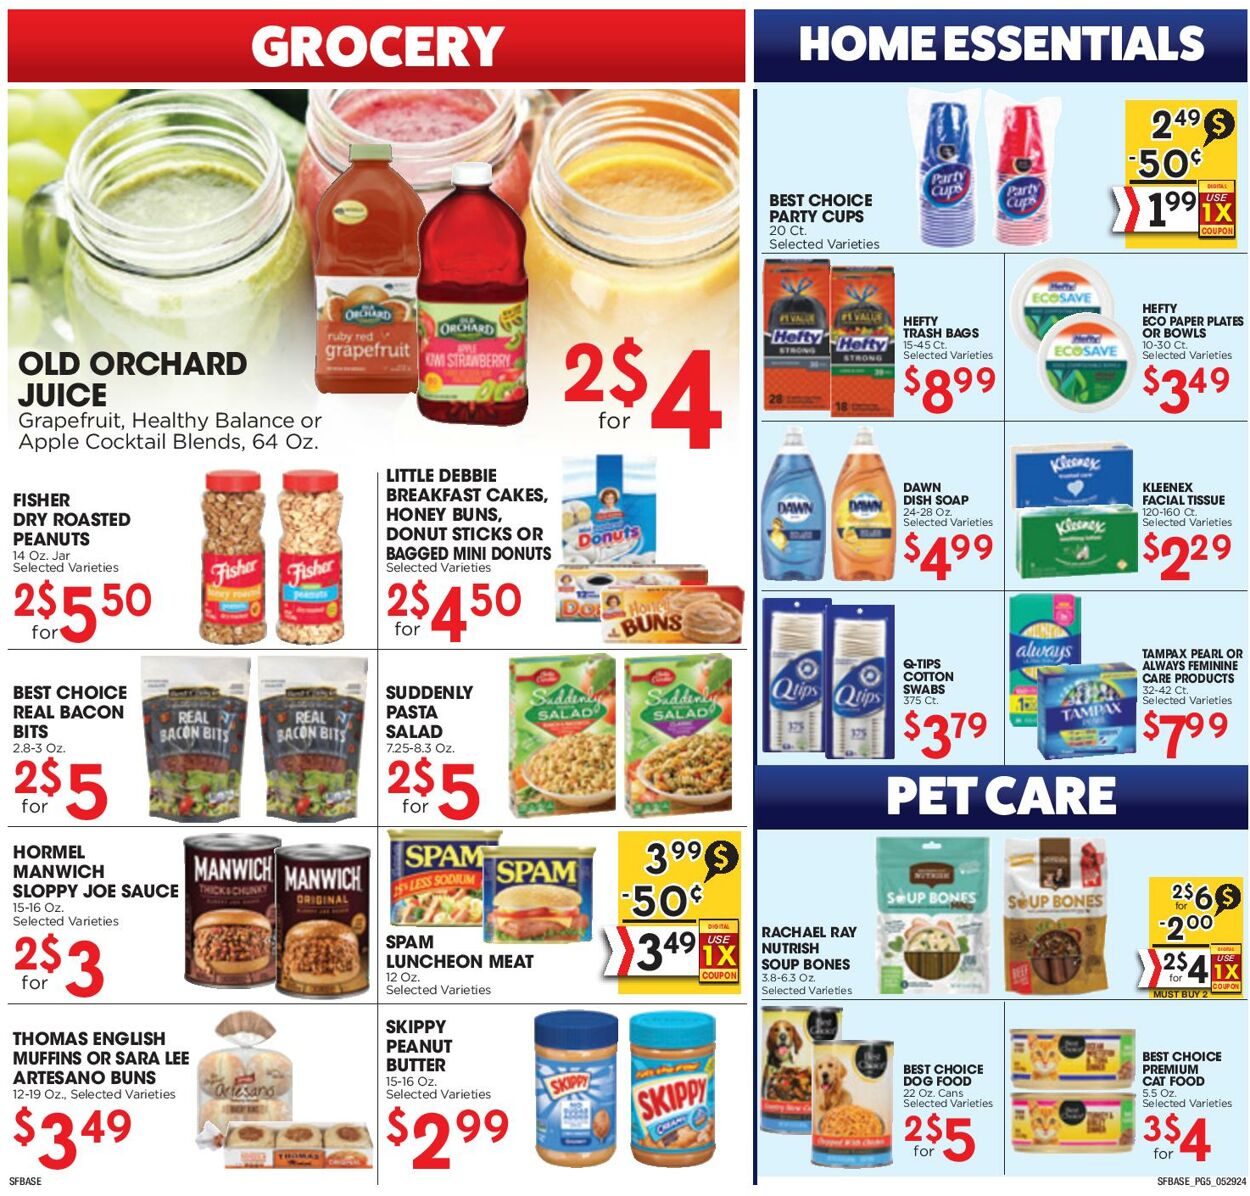 Weekly ad Sunshine Foods 05/29/2024 - 06/04/2024